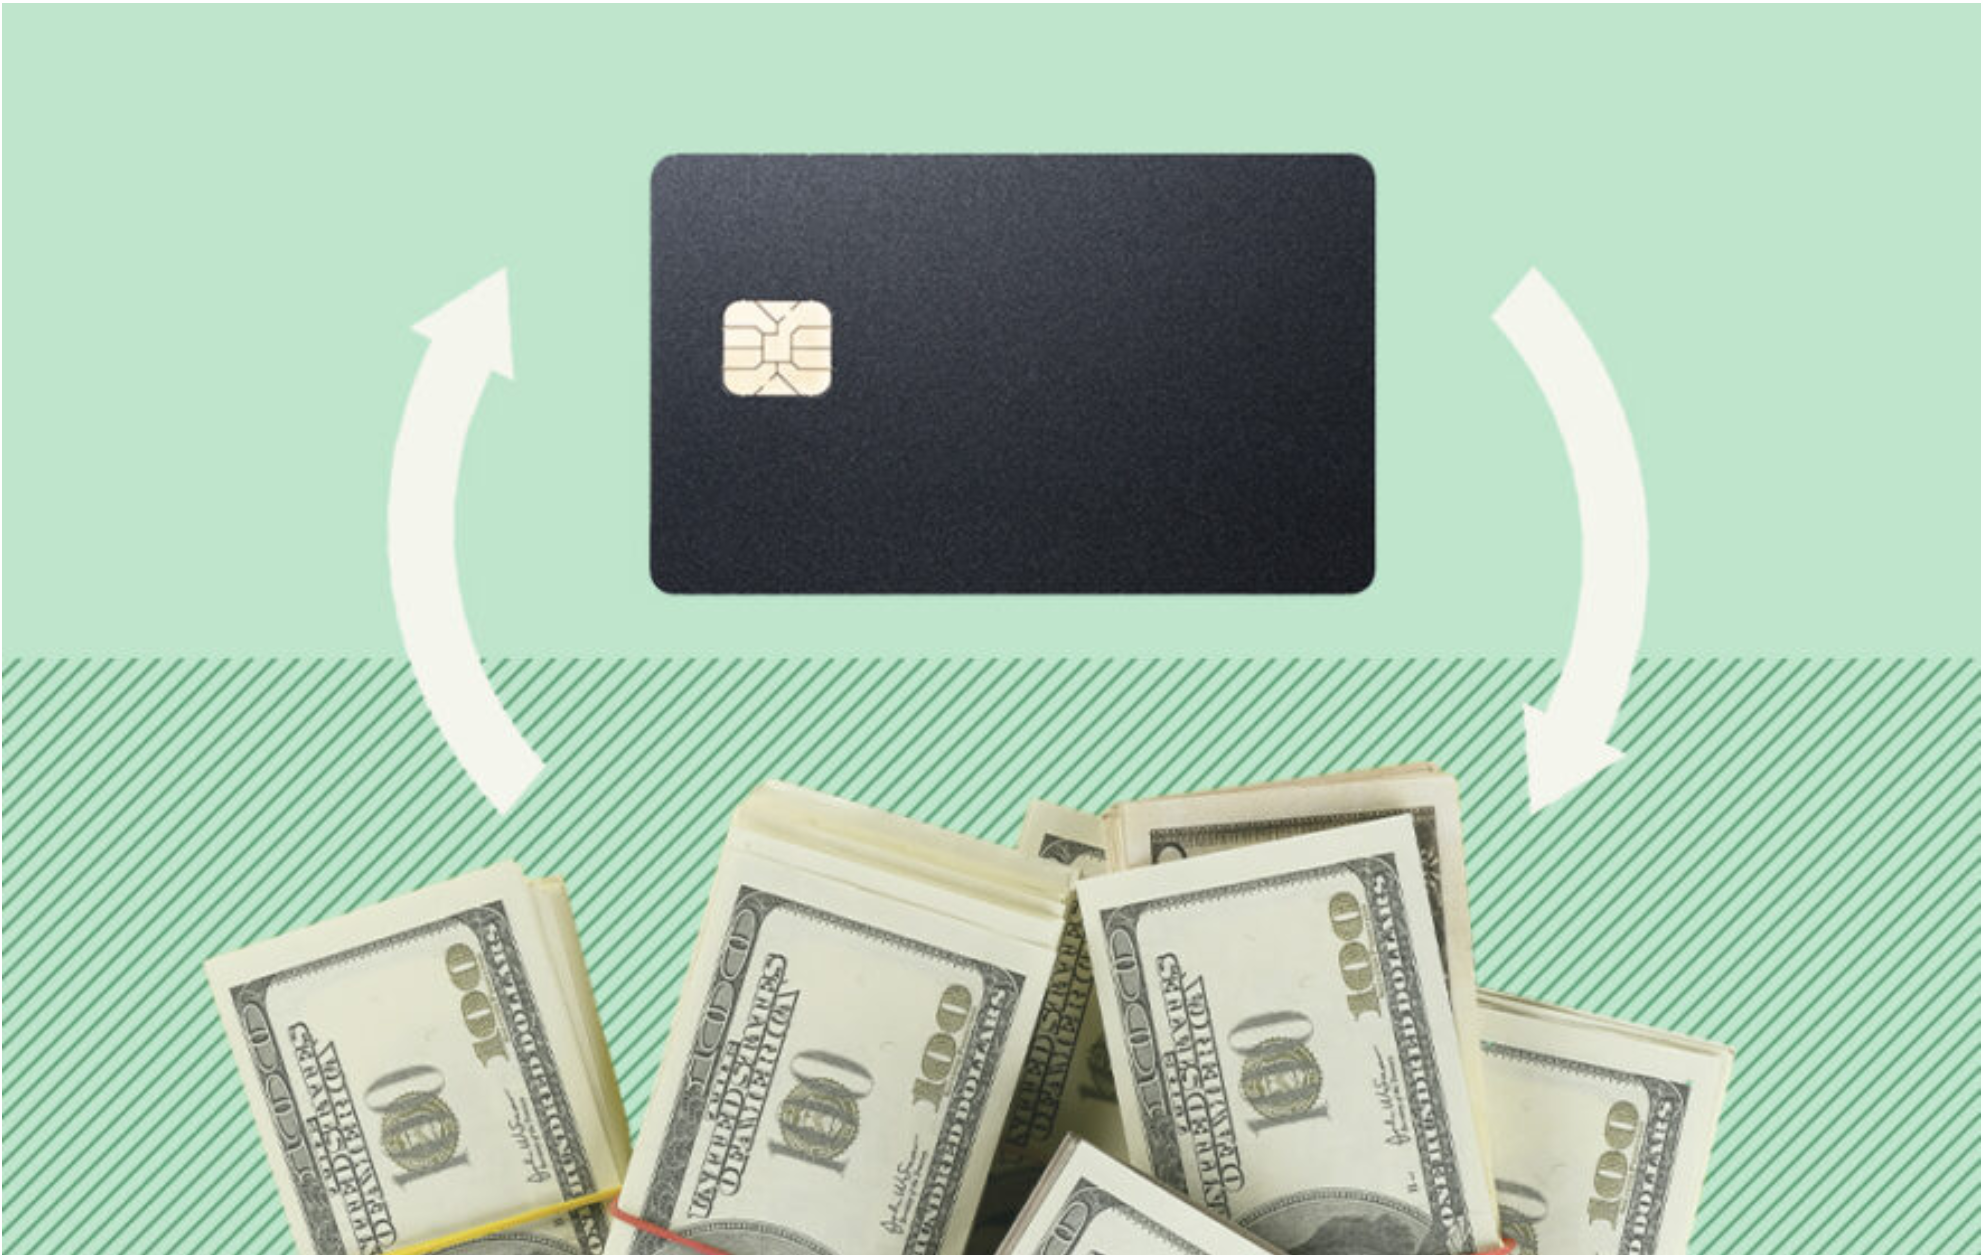 Titanium Prepaid MasterCard - Access To Credit Card Details Online